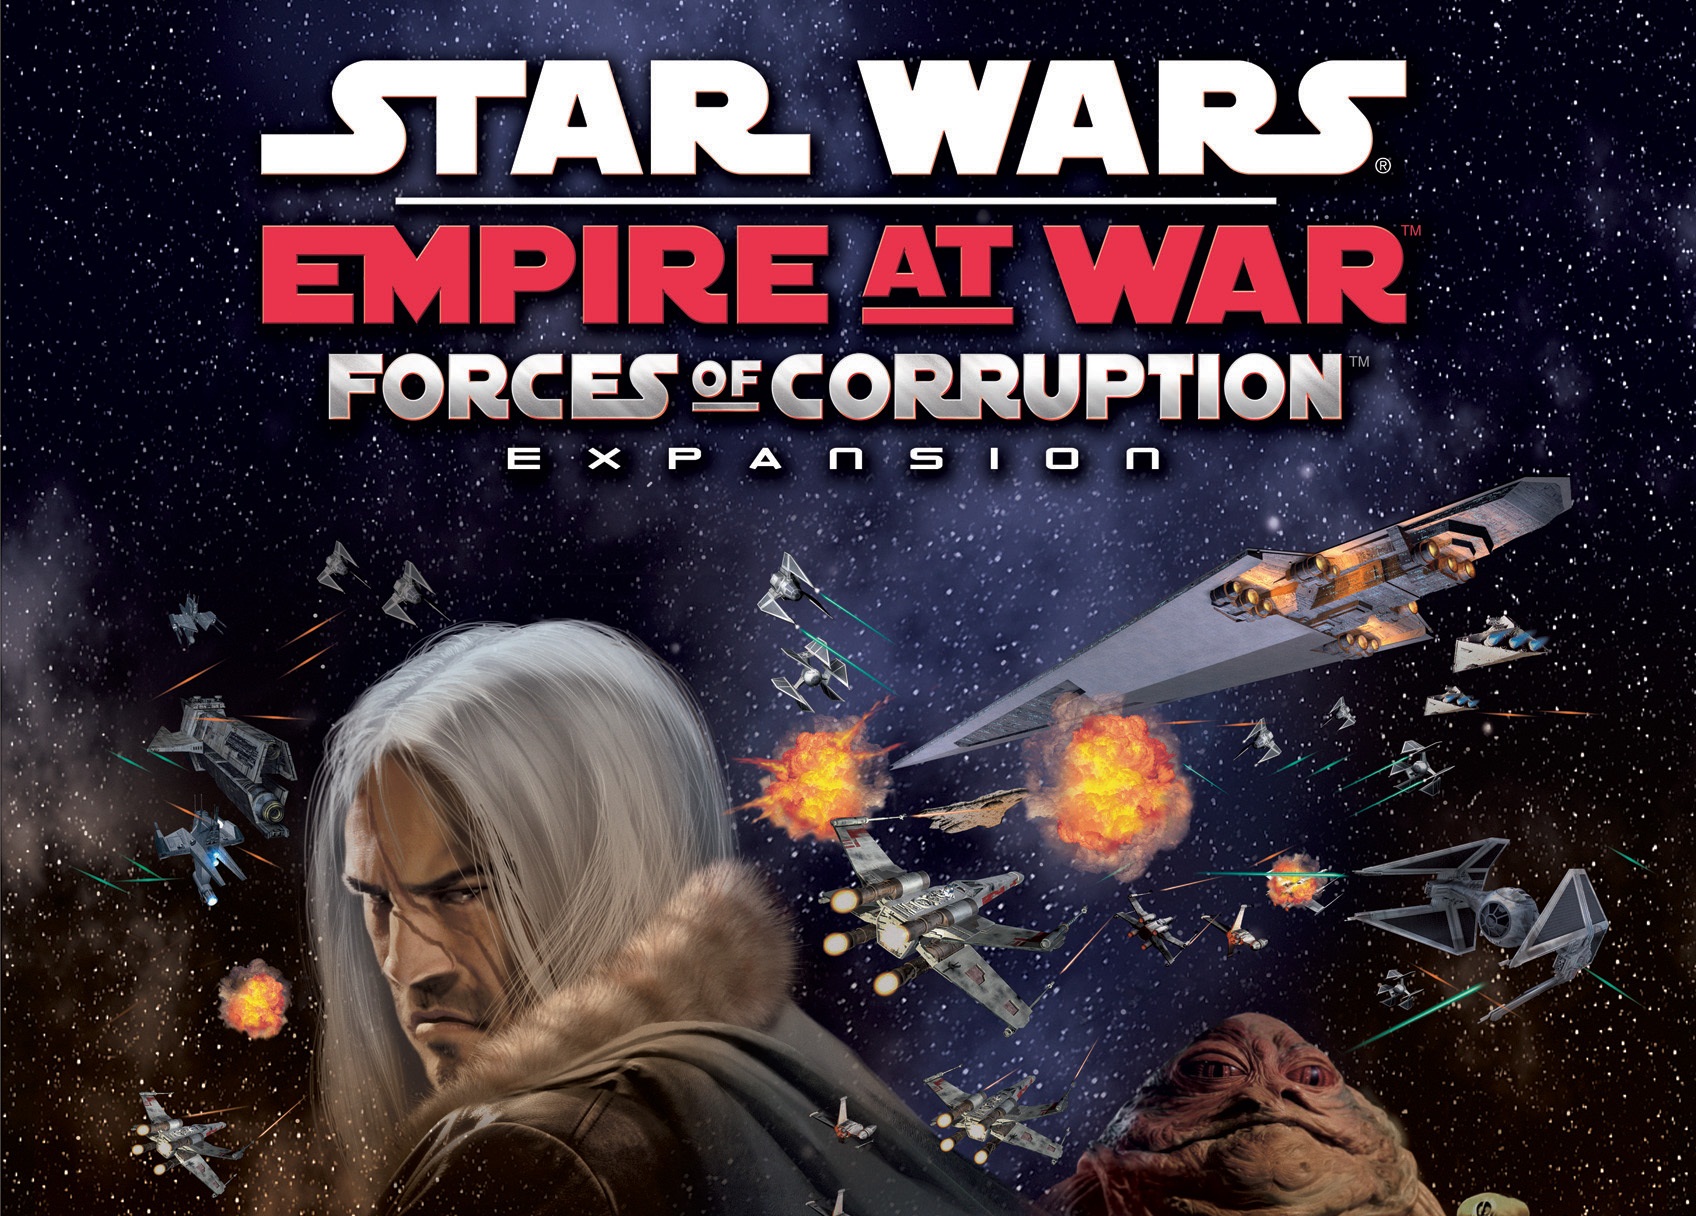 star wars monopoly pc download